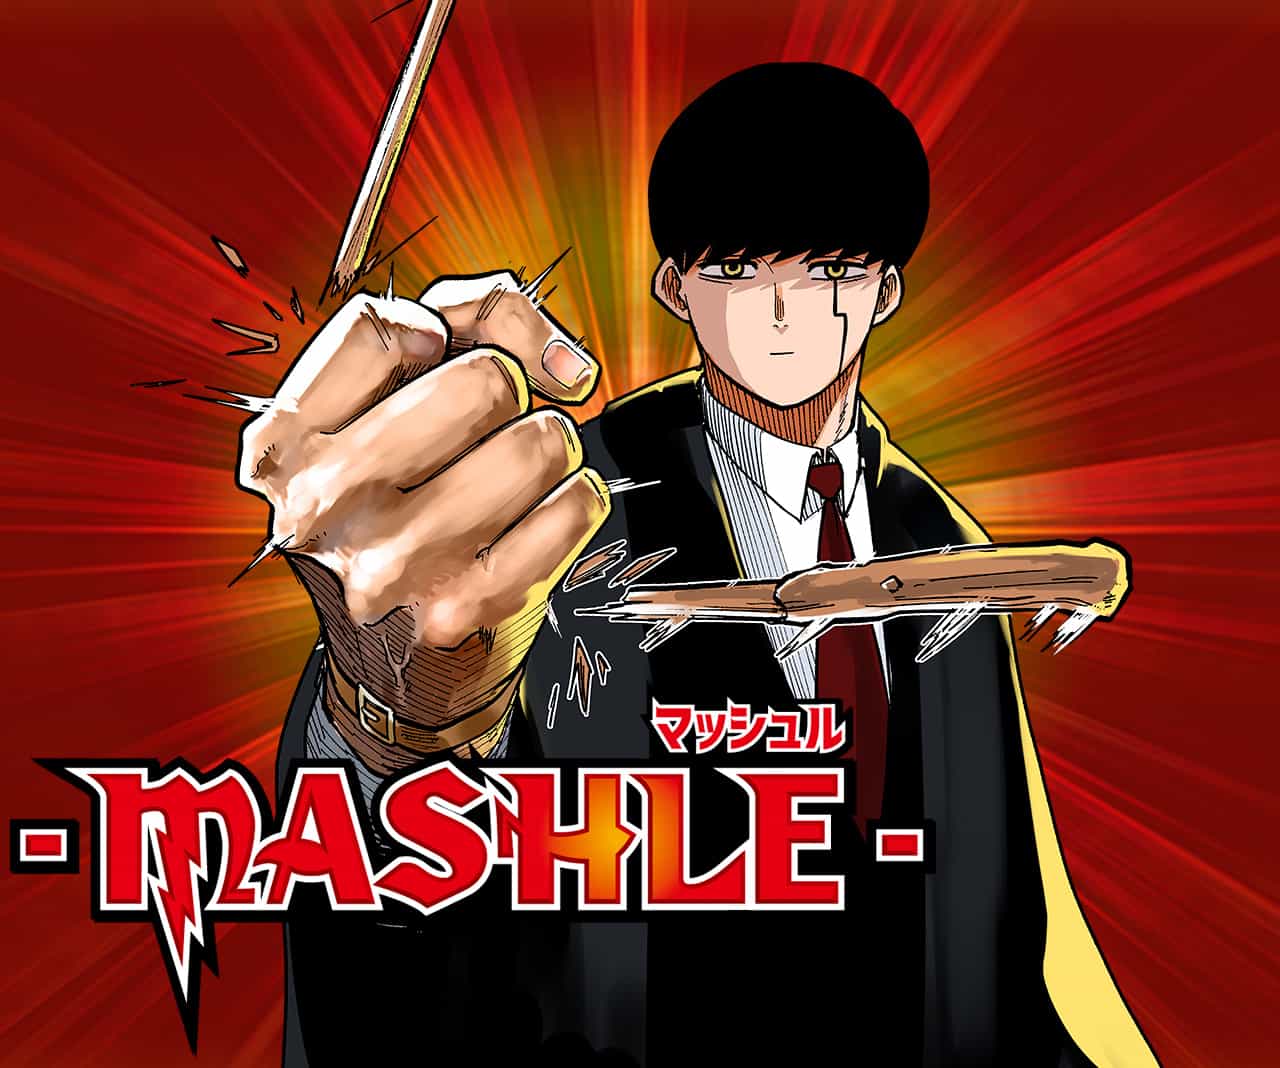 Mashle: Magic And Muscles Anime Announces New Cast Member : r/MASHLE